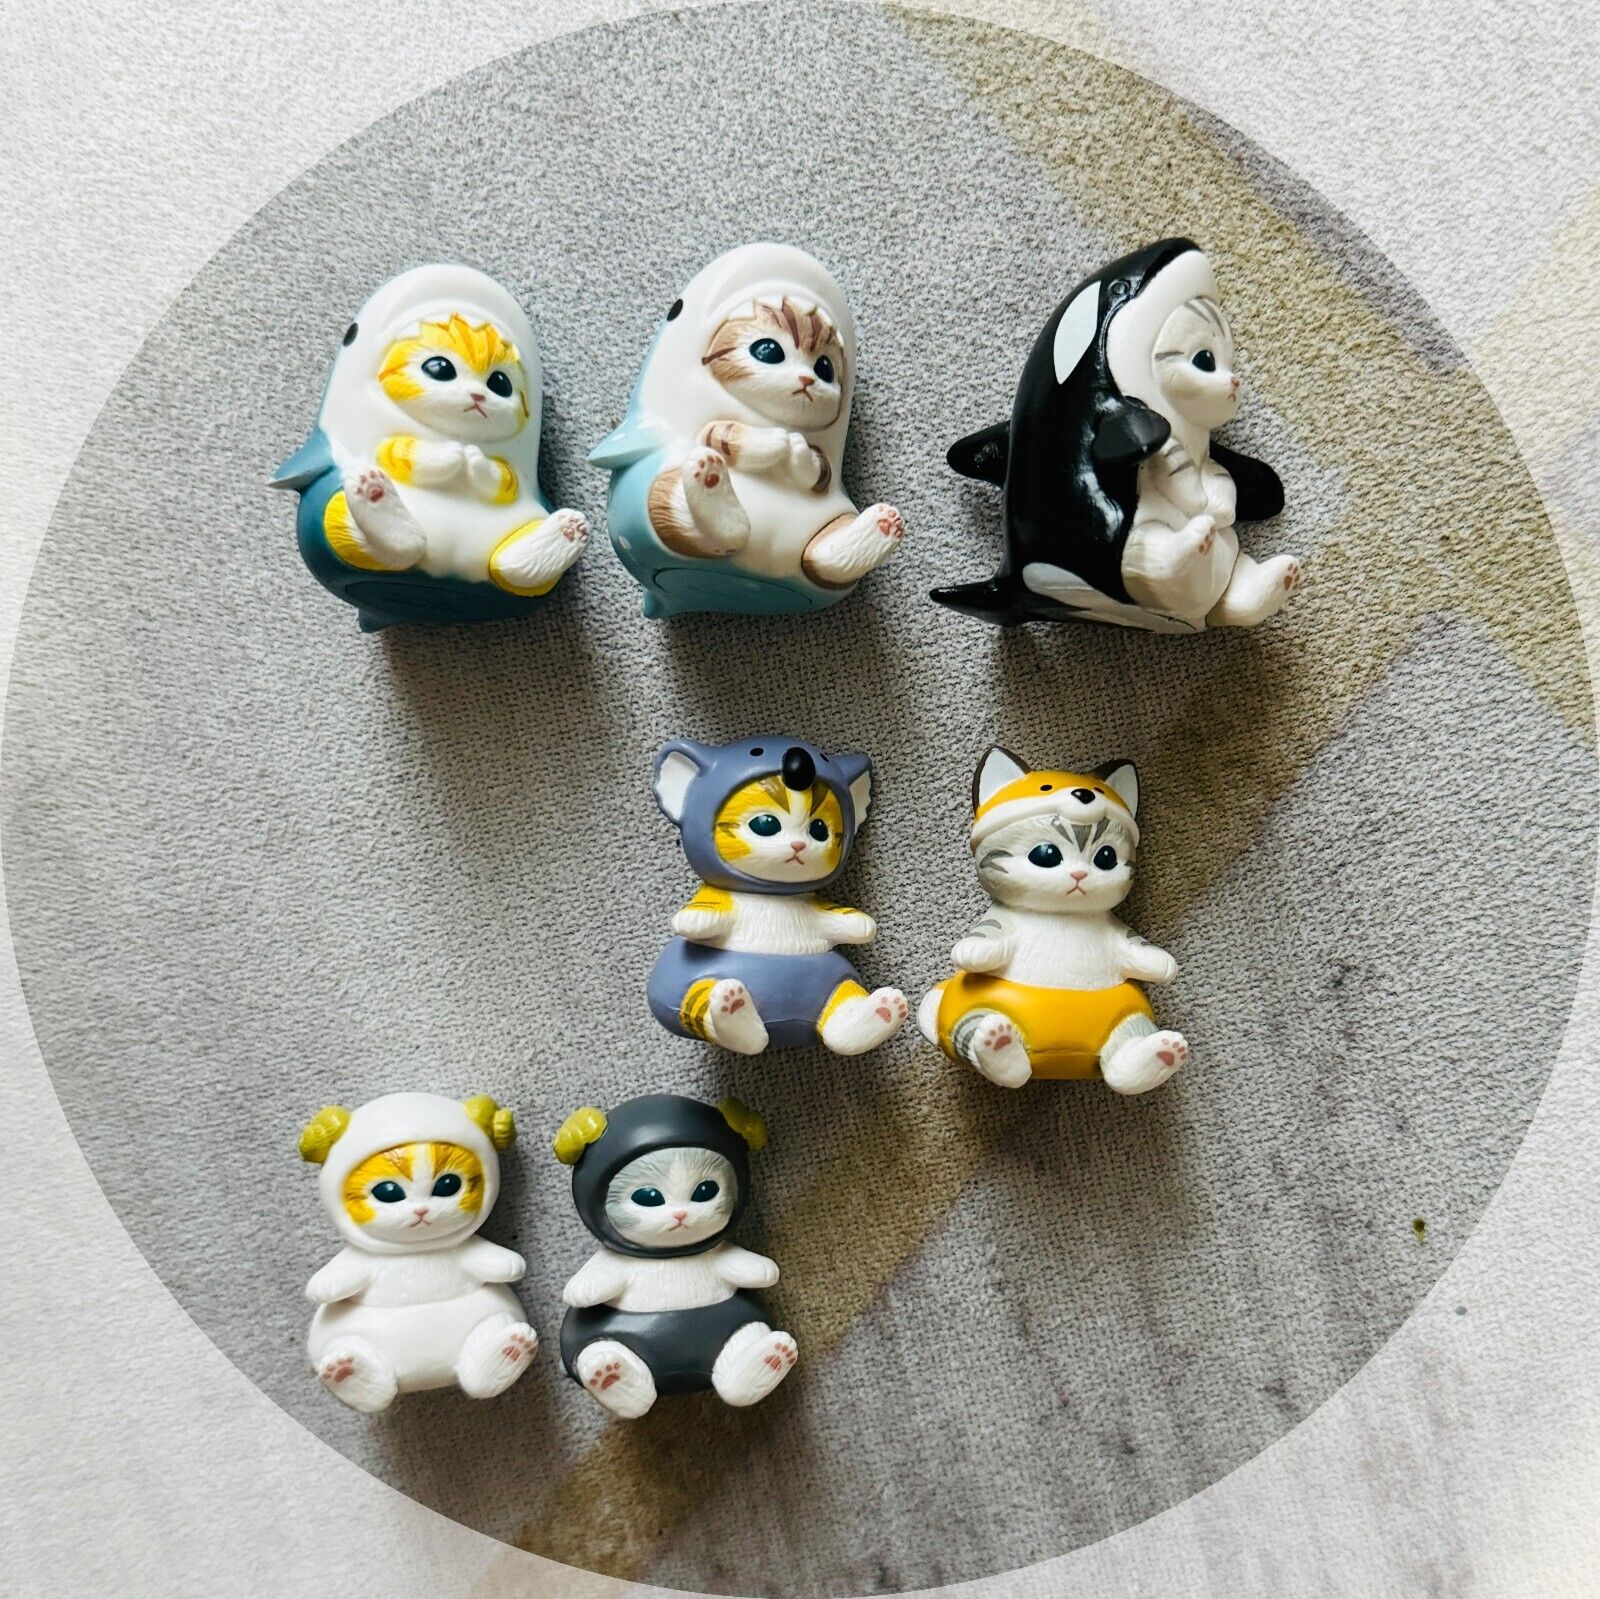 Mofusand Animal Creatures Interior Mini Figure Capsule Toy Set of 7